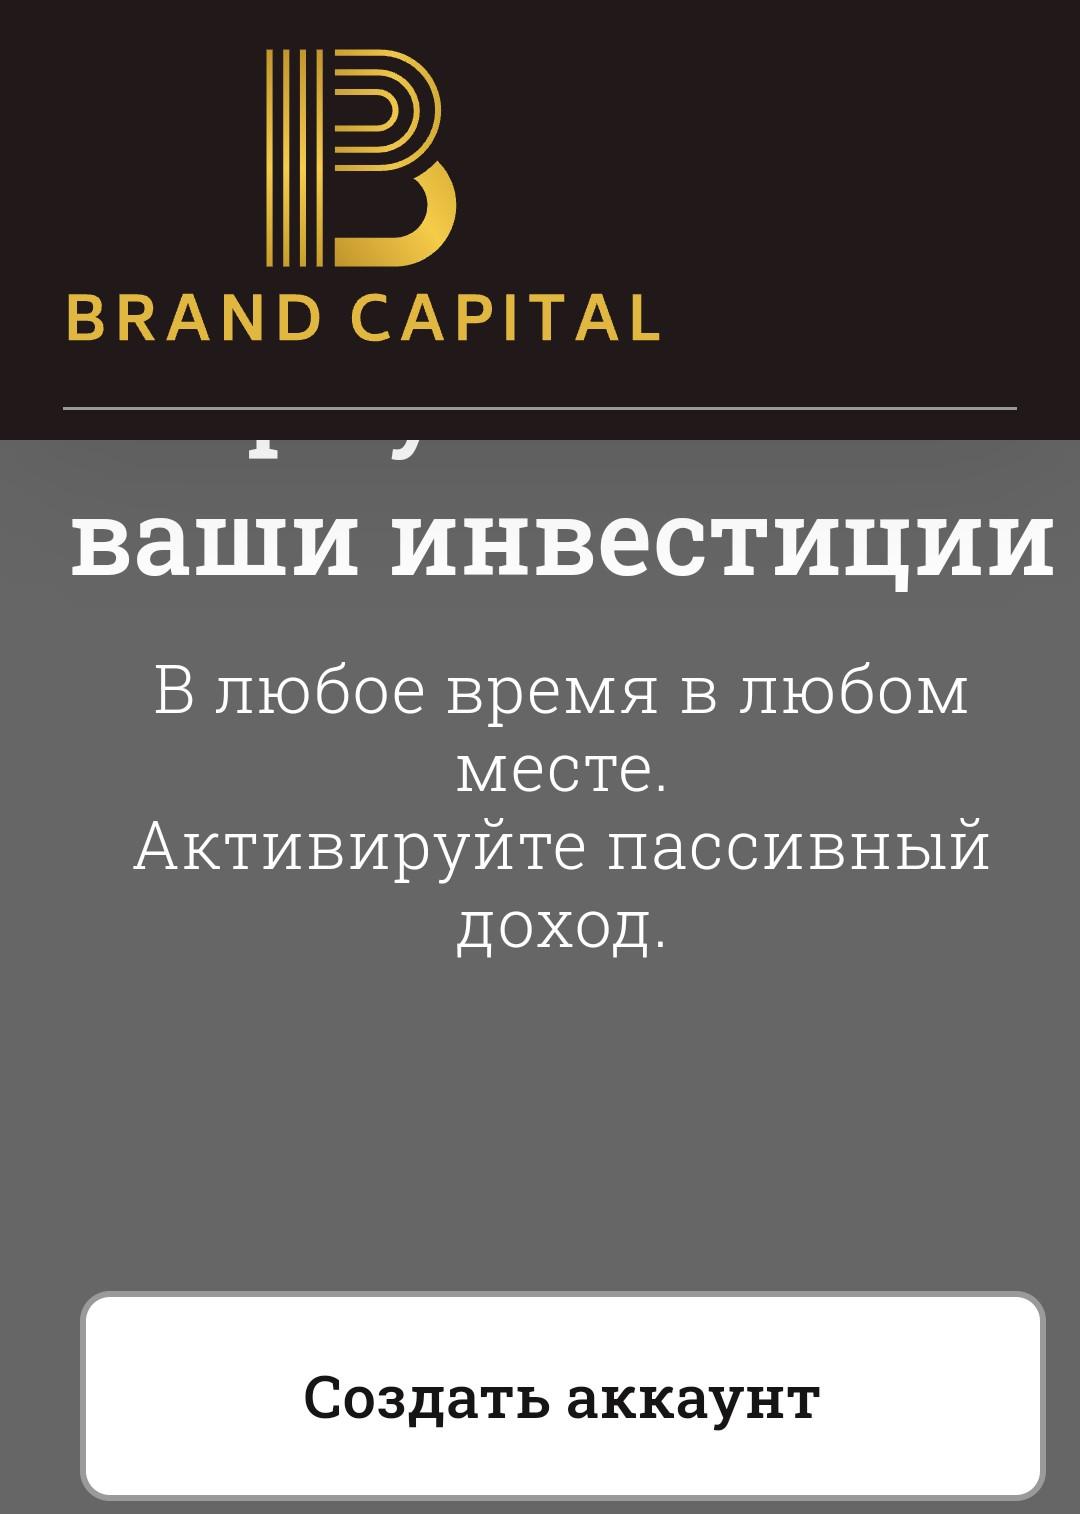 Сайт Brand capital